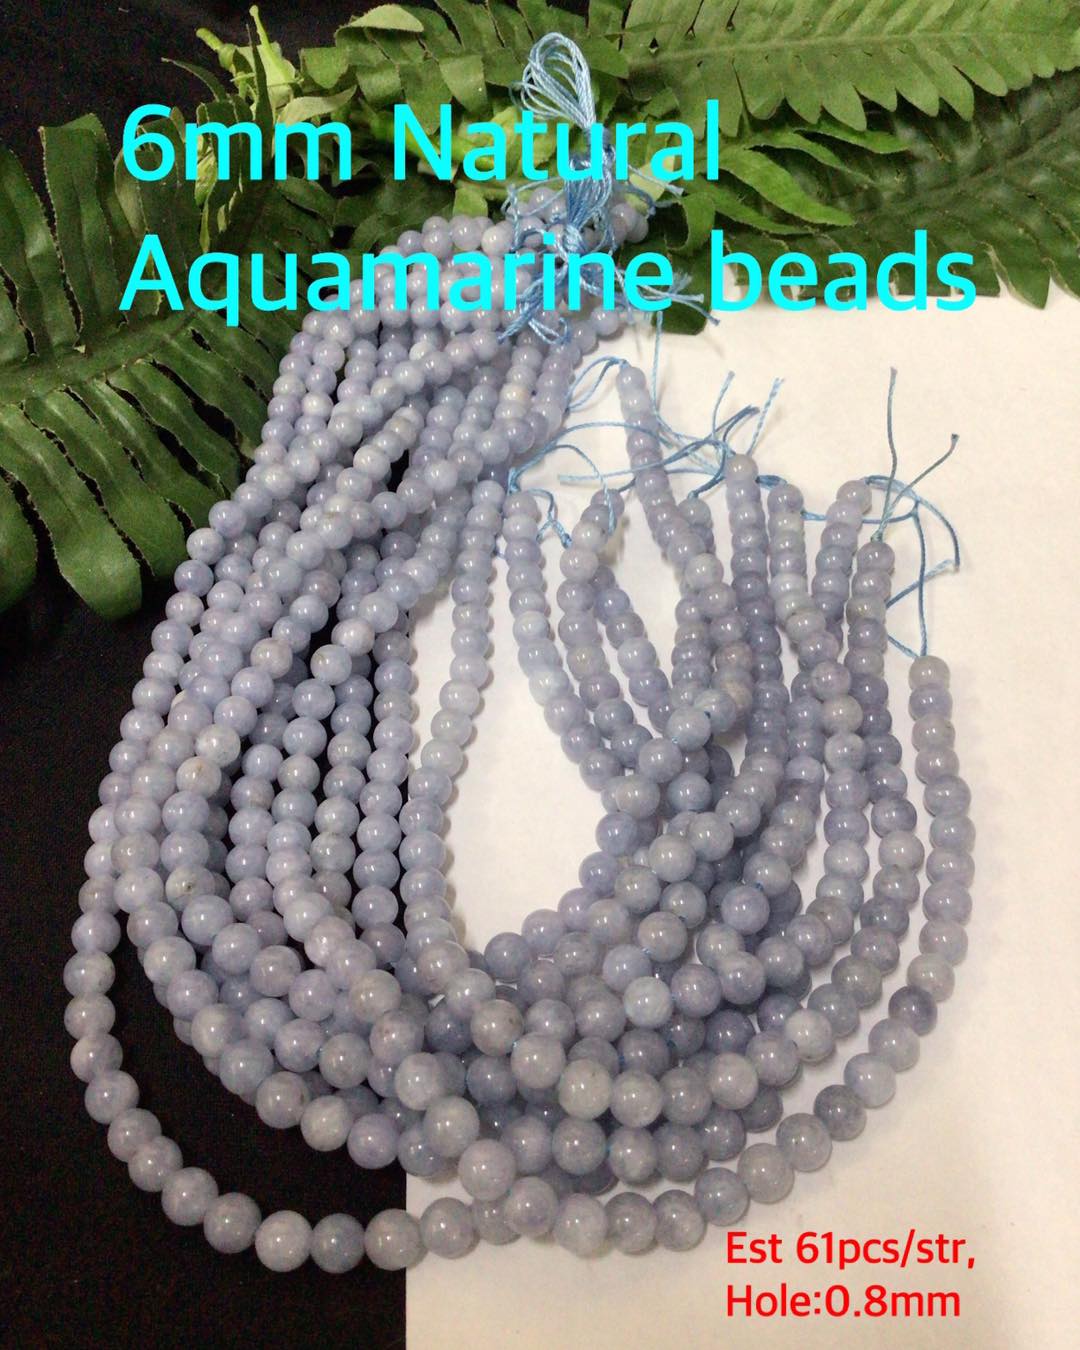 6mm Natural Aquamarine beads (est 61pcs) - CraftEZOnline | Arts And ...